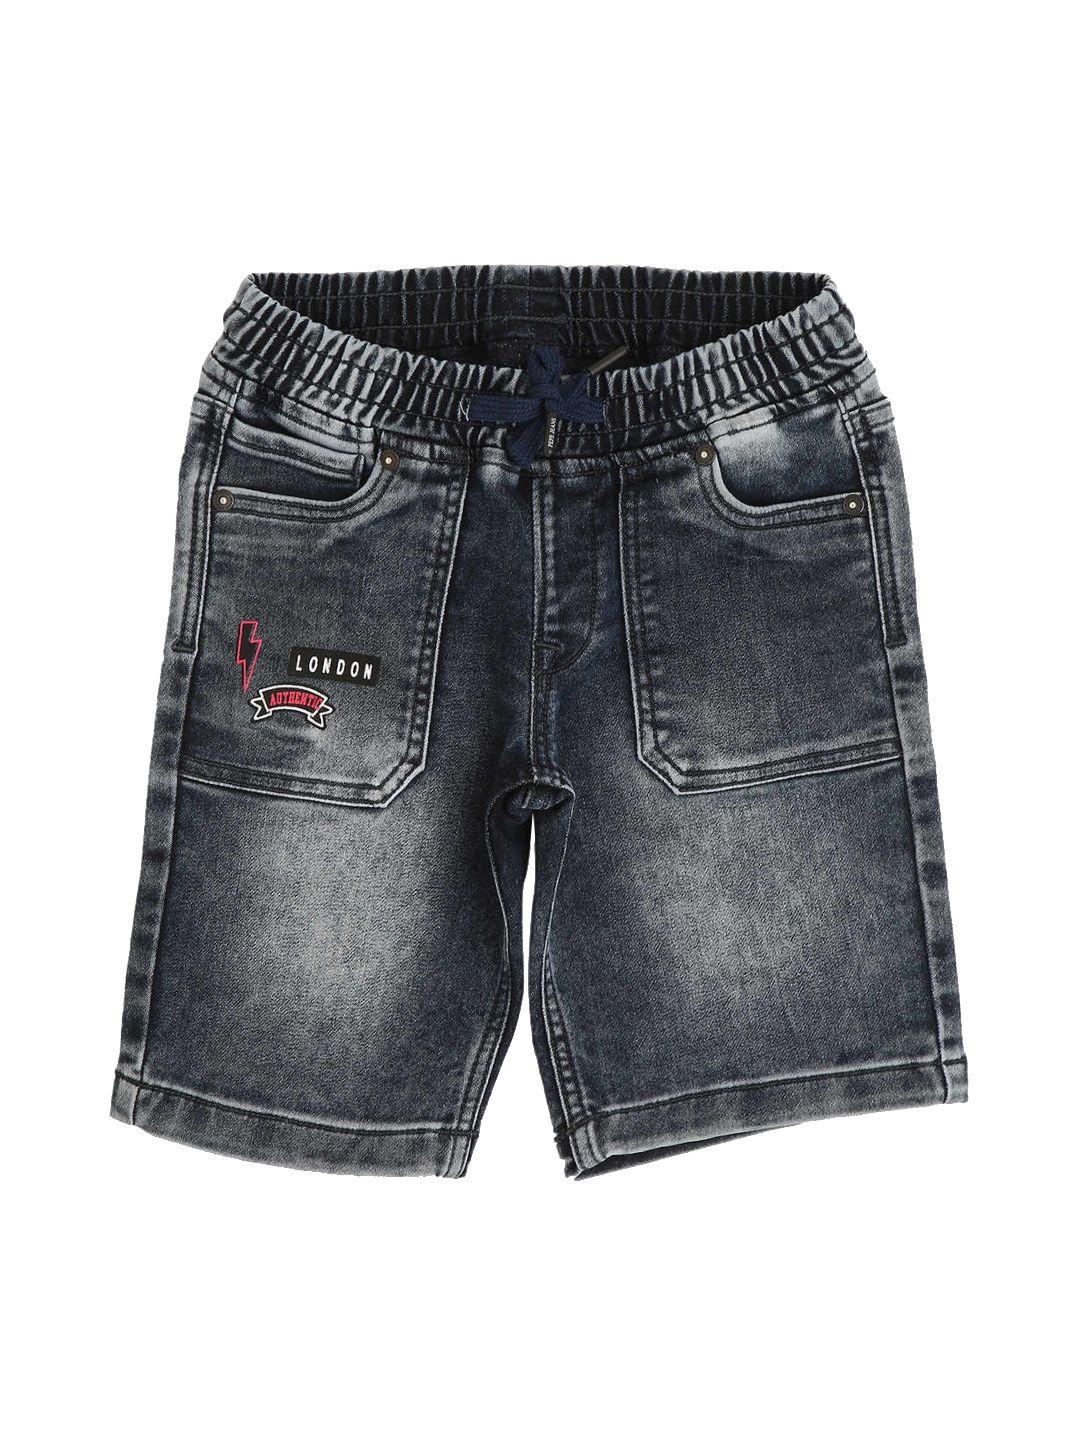 pepe jeans boys washed slim fit denim shorts